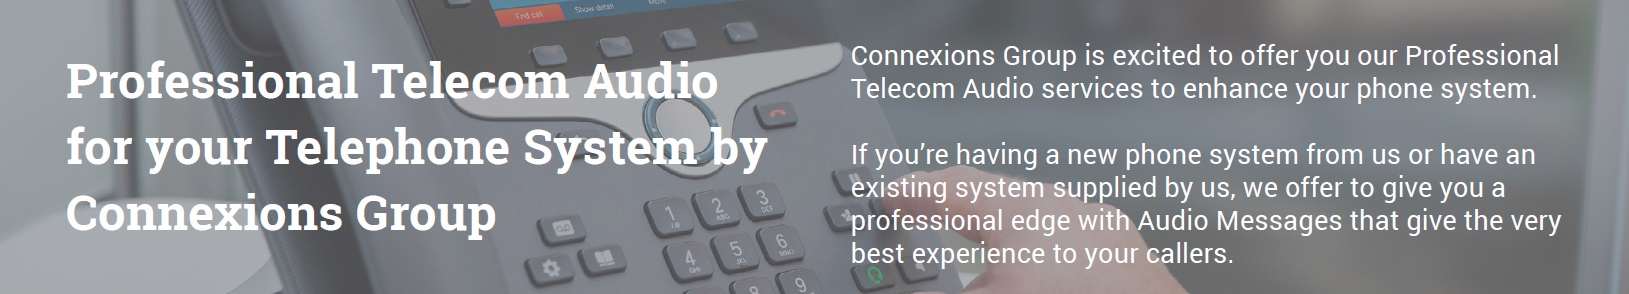 professional telecom audio